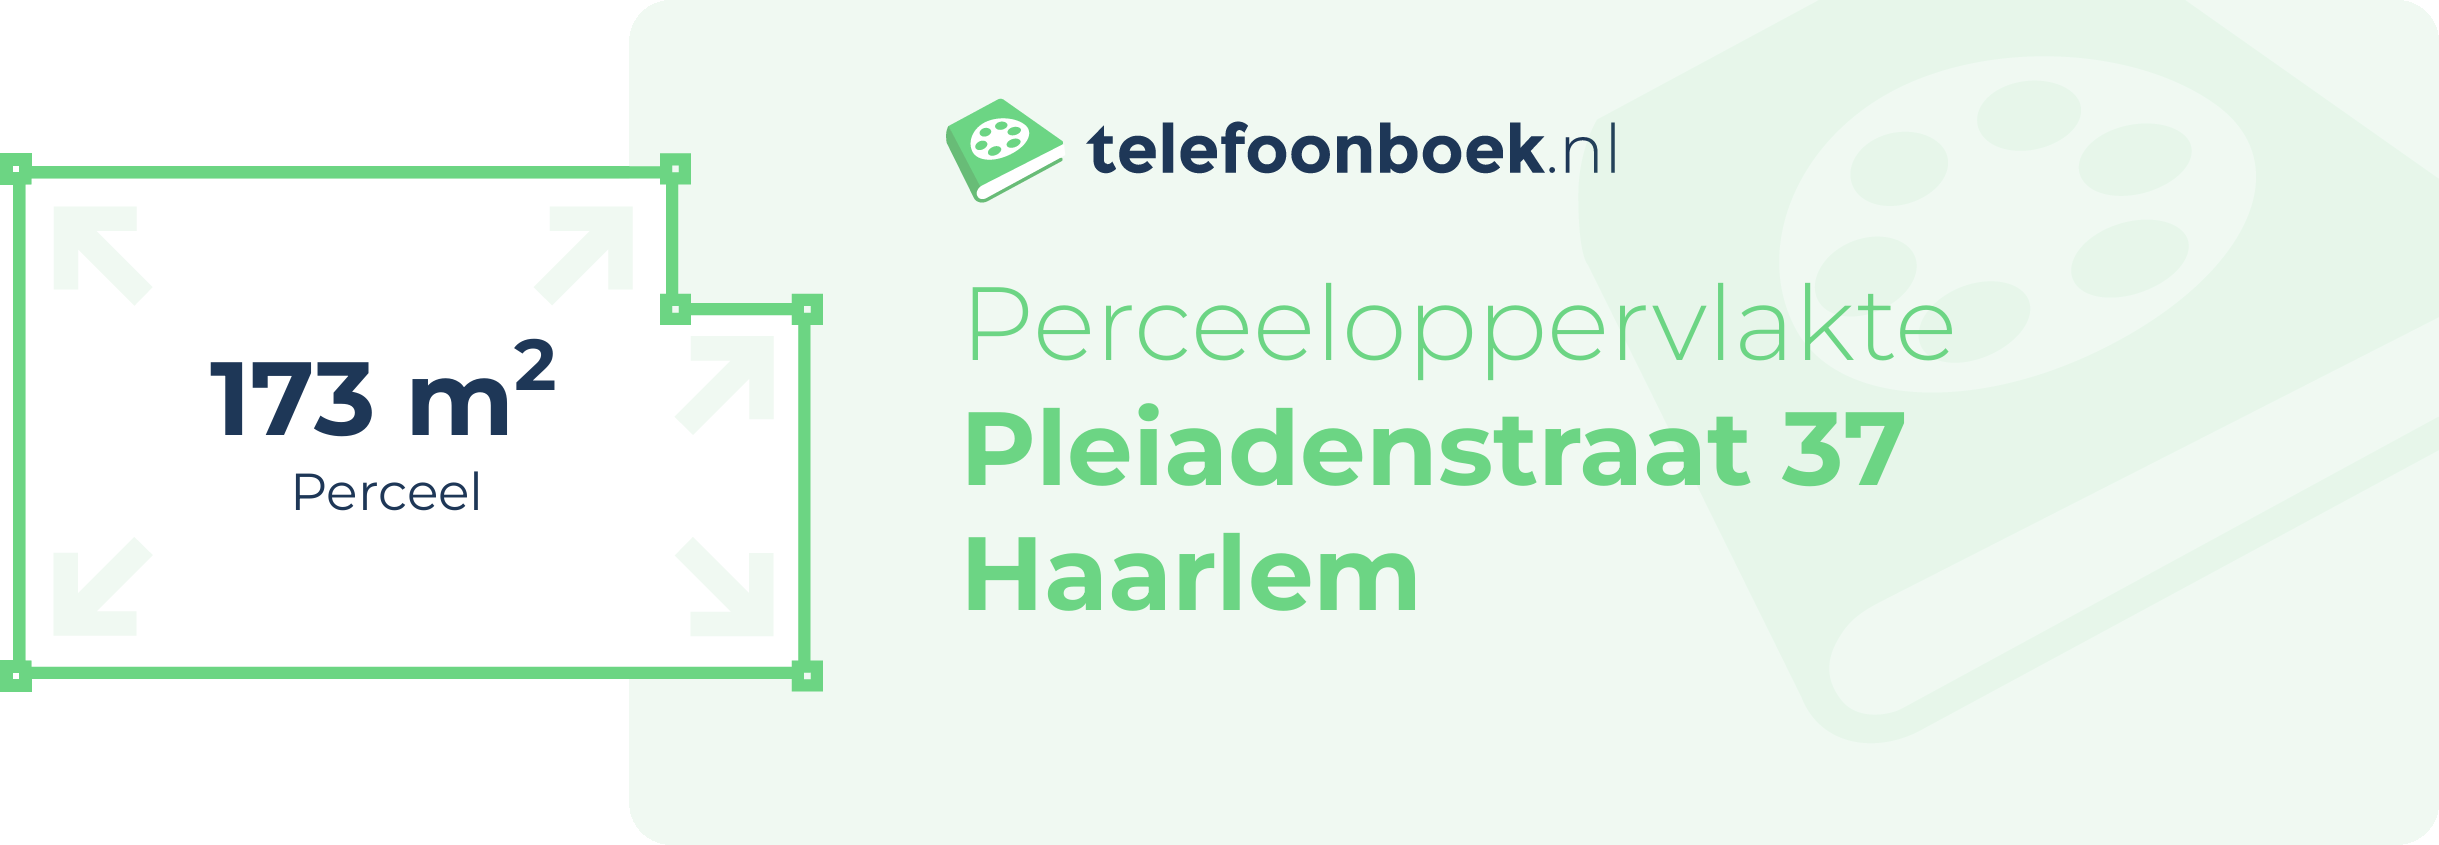 Perceeloppervlakte Pleiadenstraat 37 Haarlem